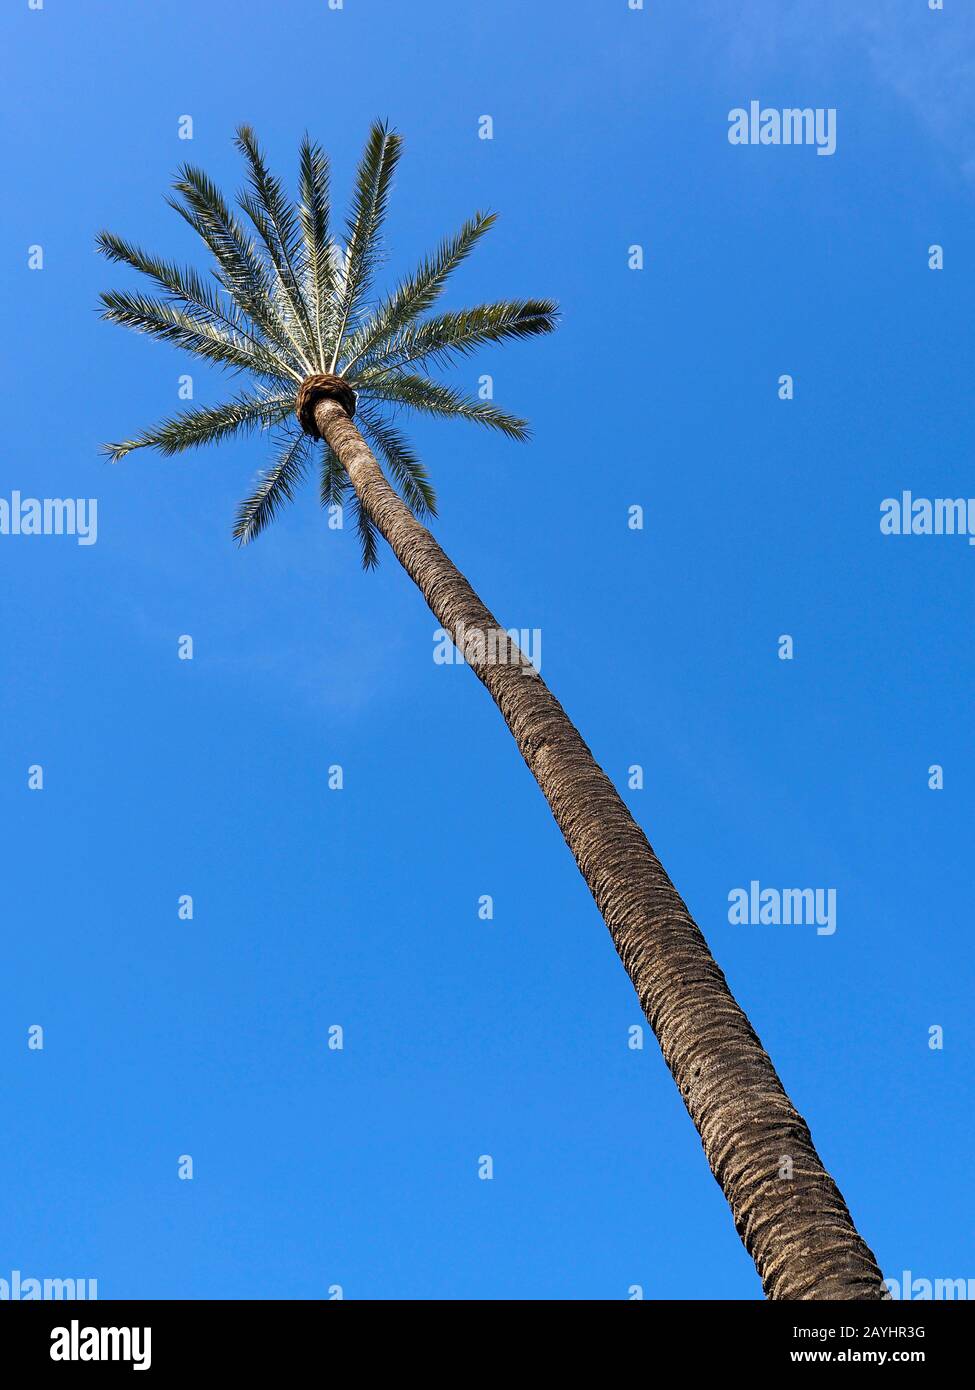 Sehr hohe Palme in Sevilla, Spanien, gegen den blauen Himmel Stockfoto